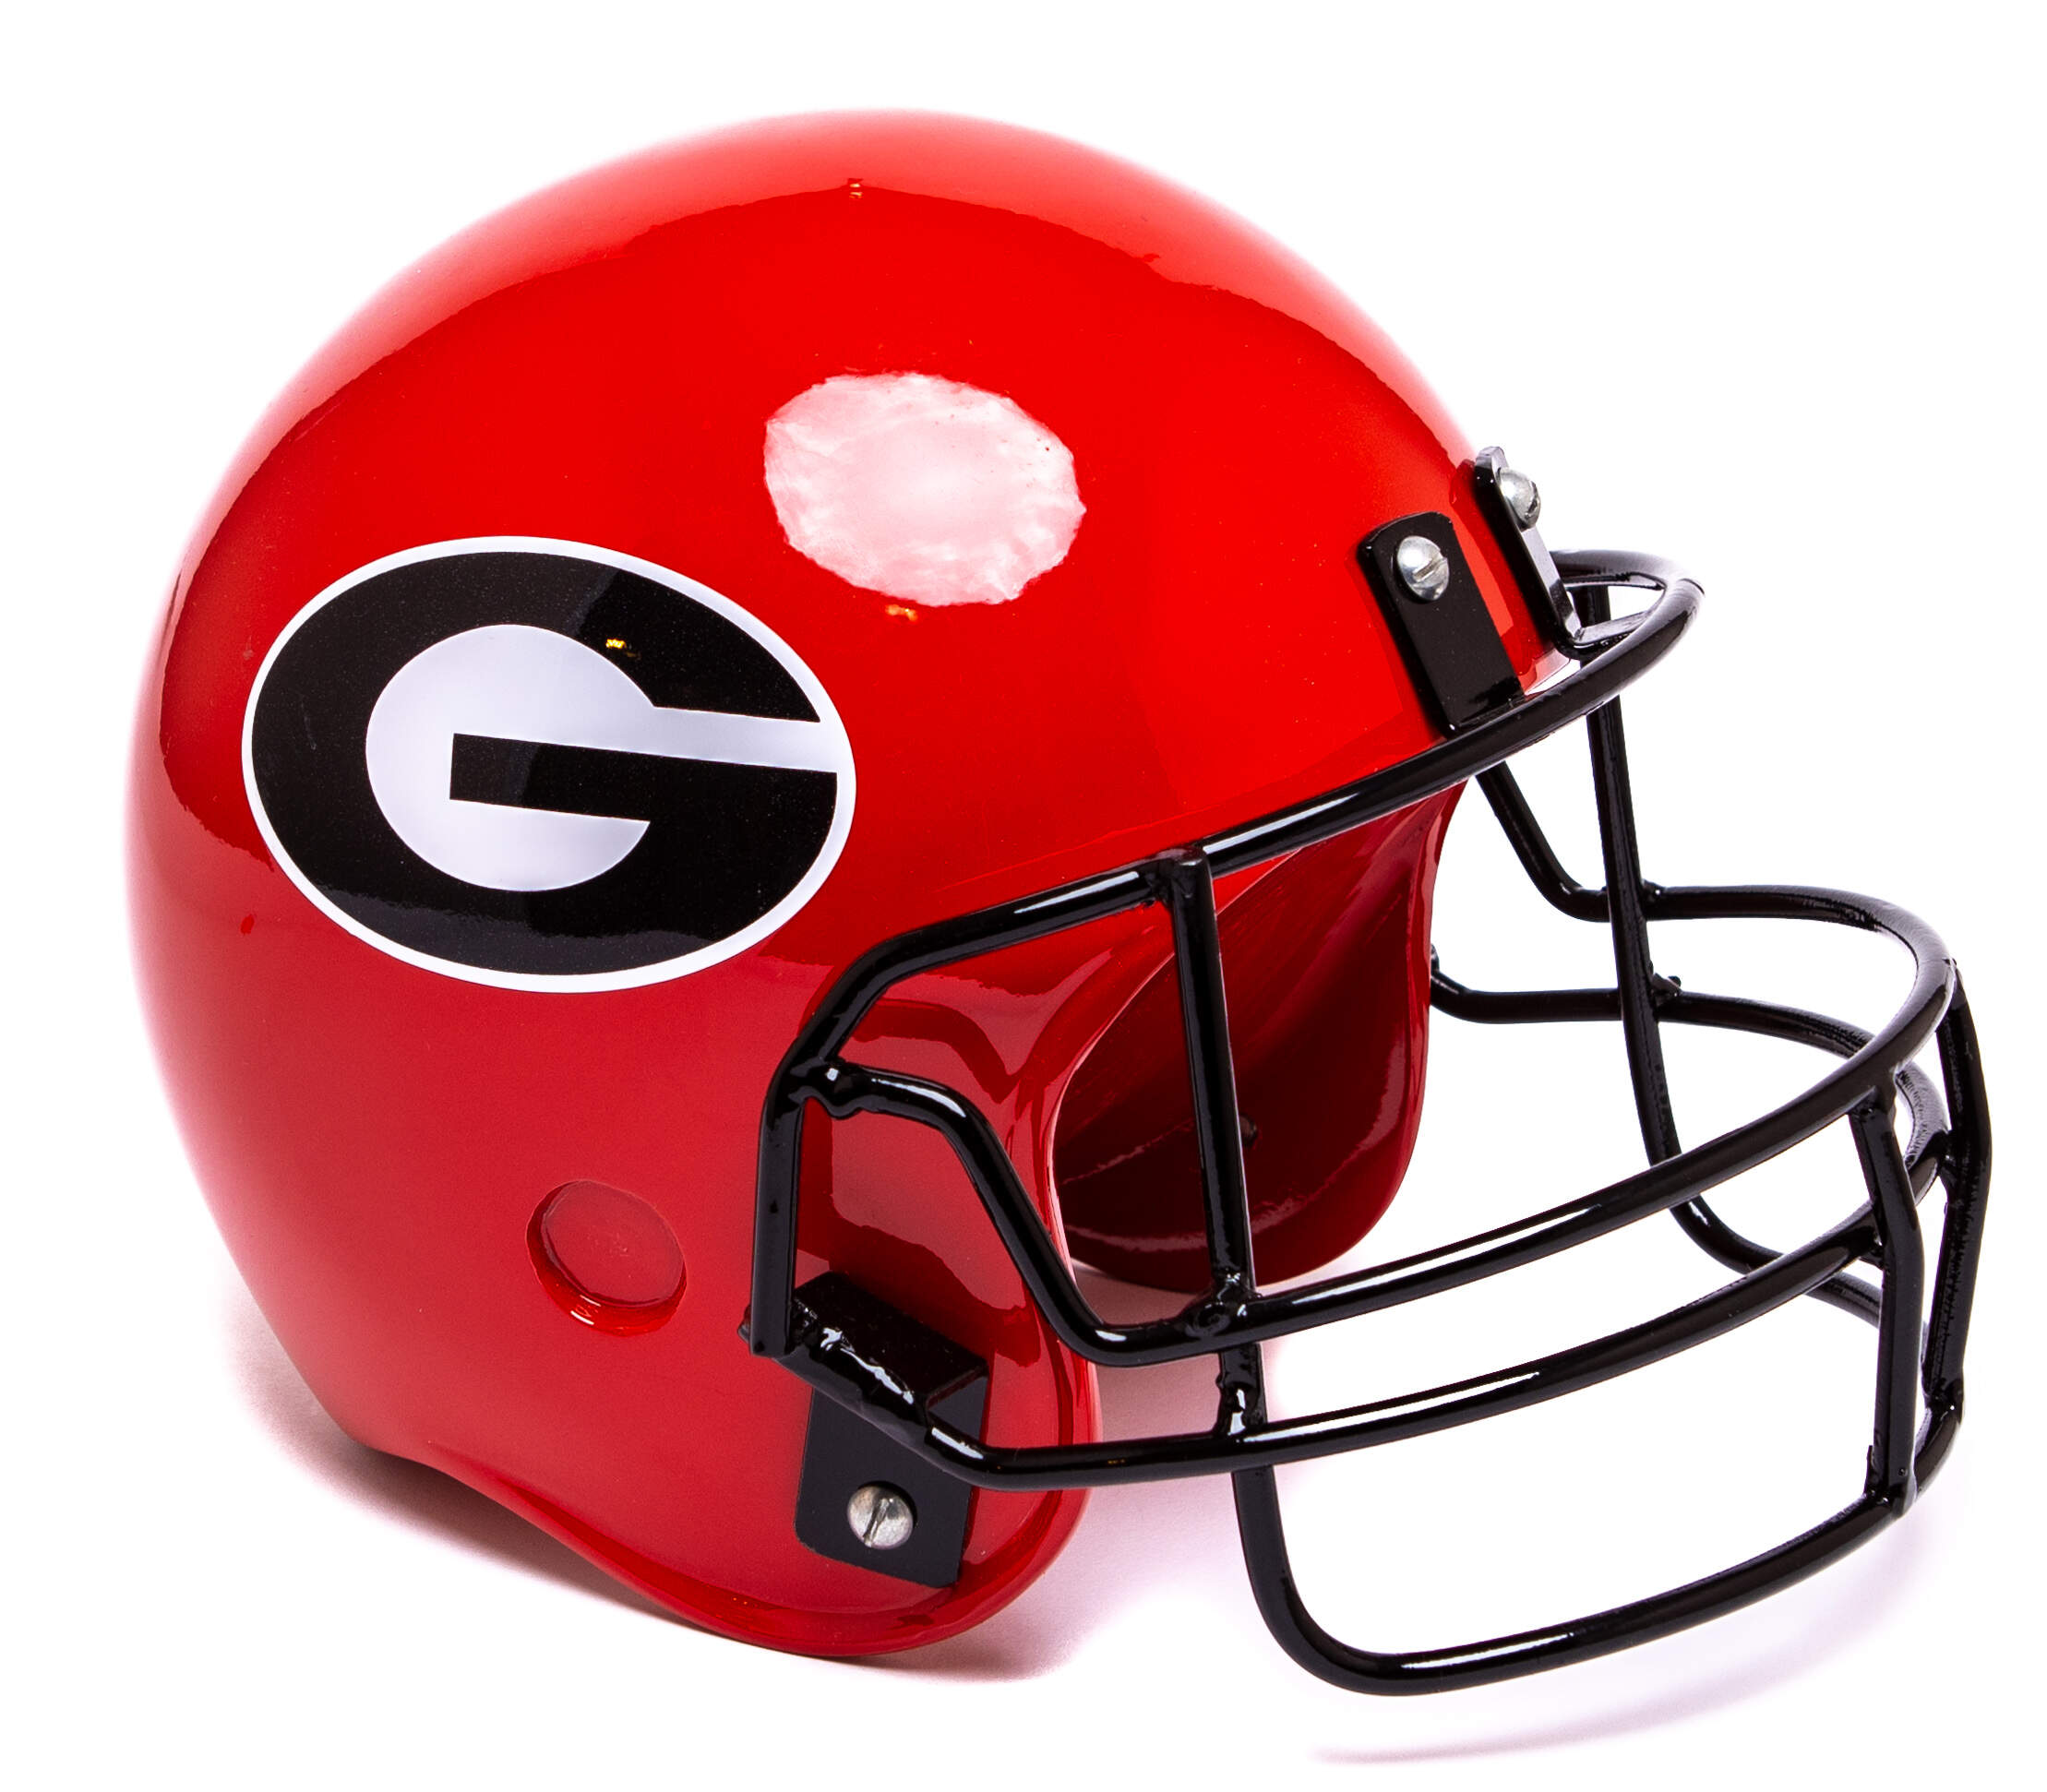 The Georgia Helmet